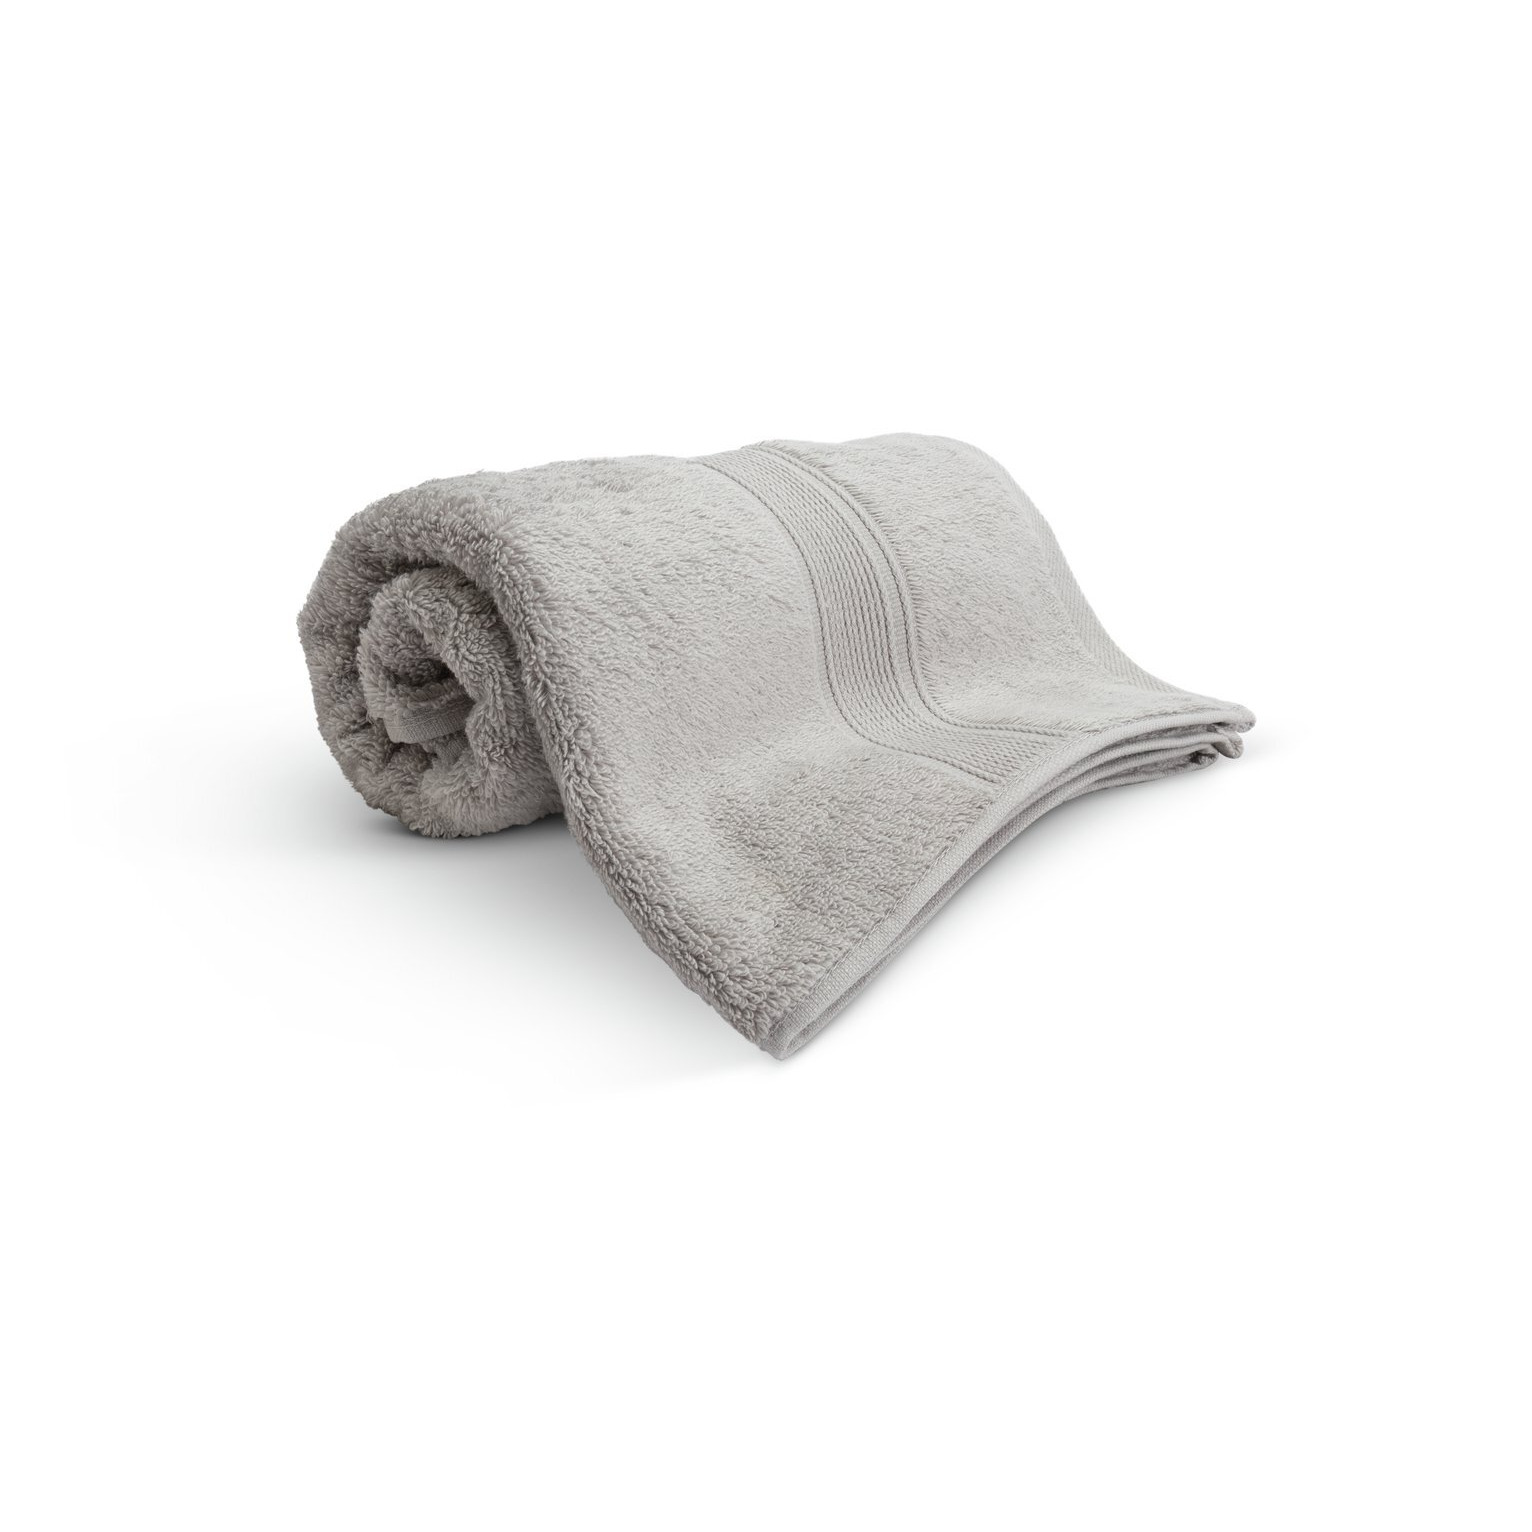 Habitat Cotton Supersoft Hand Towel - Silver - image 1